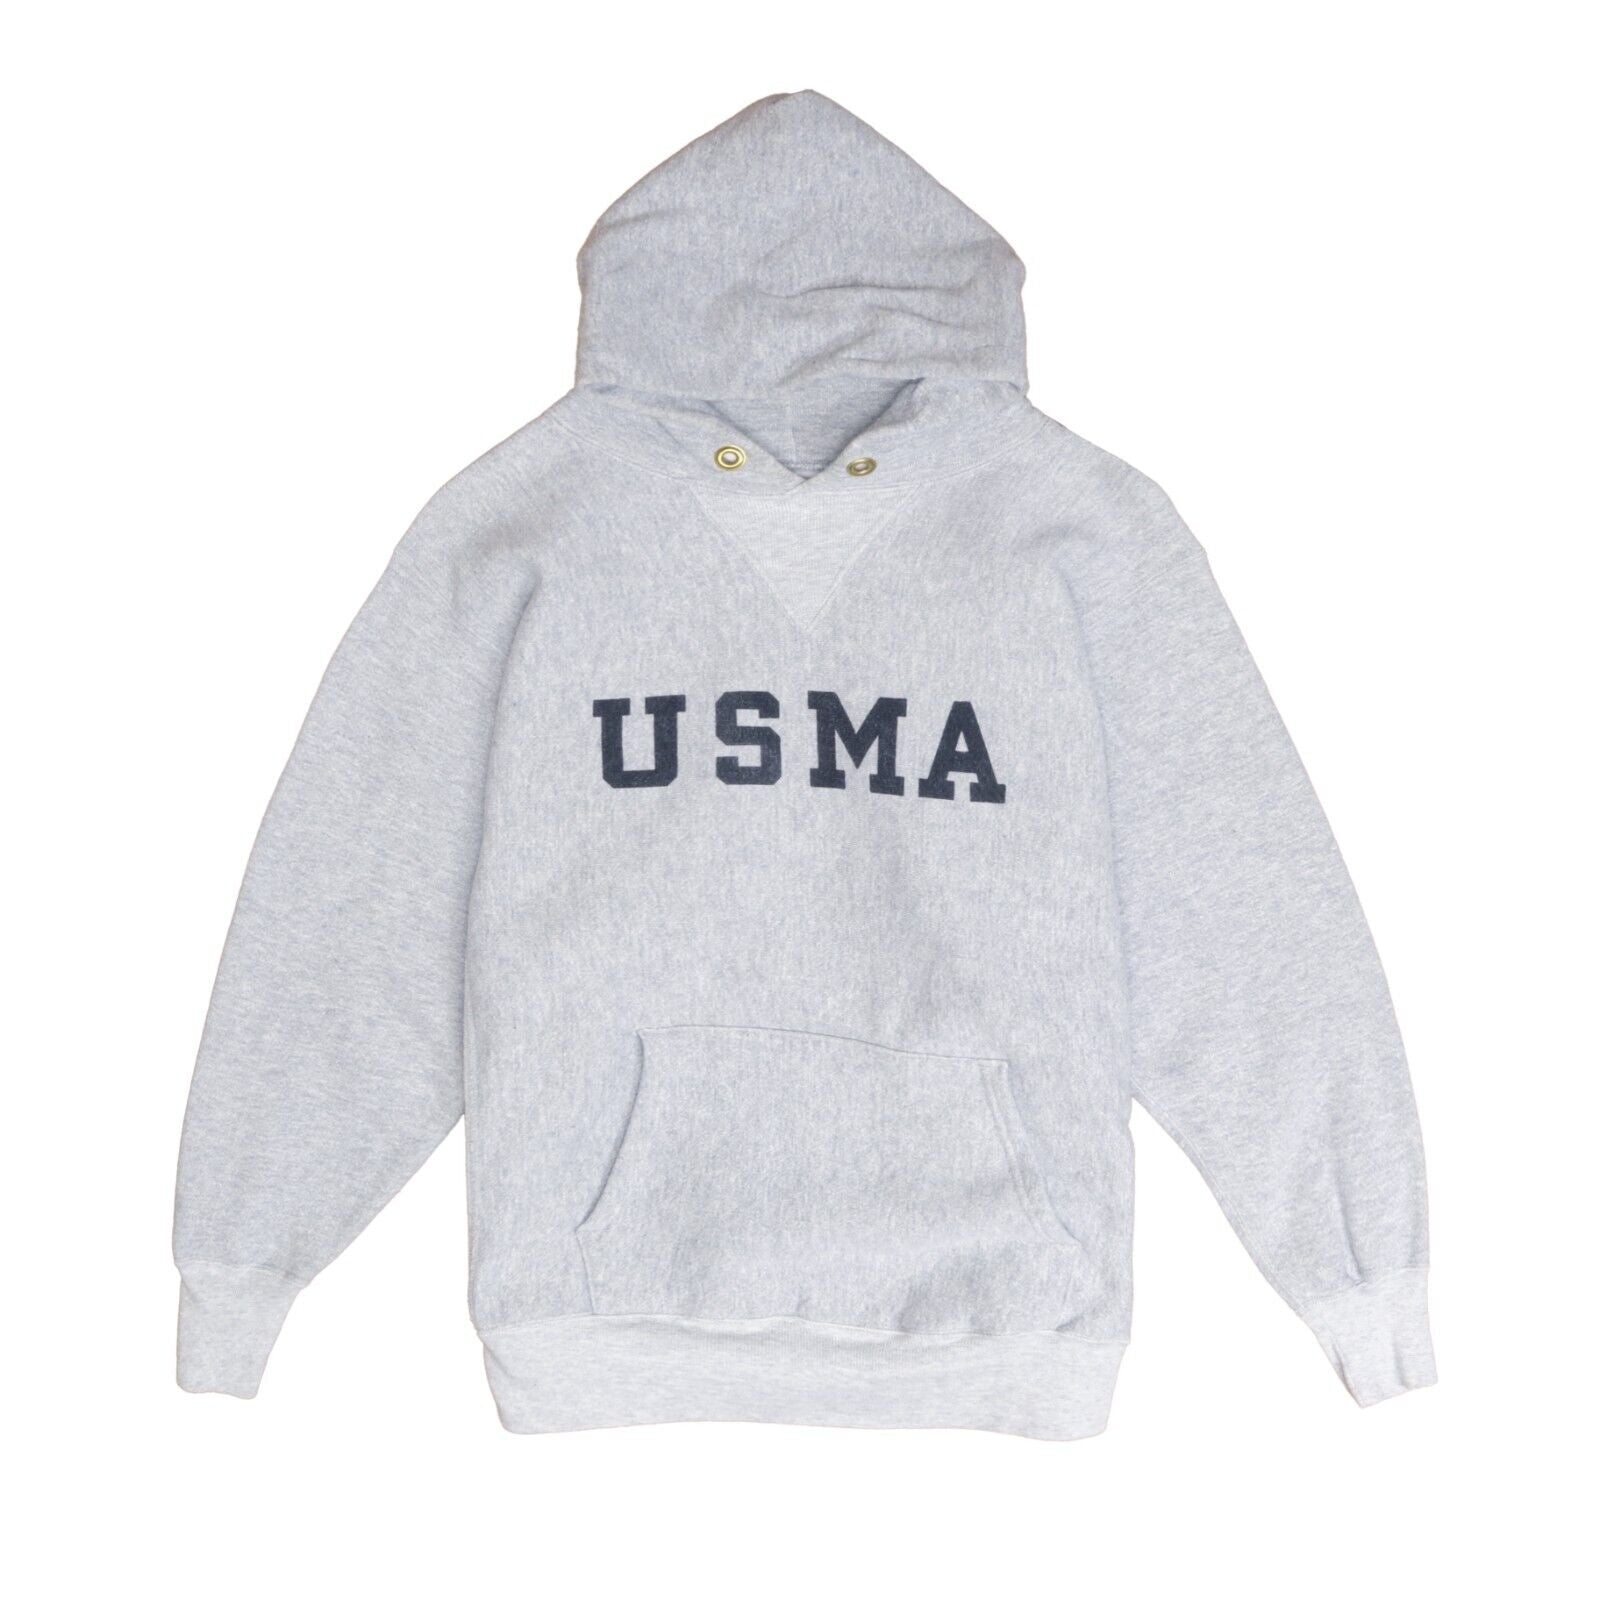 Vintage USMA Champion Reverse Weave Sweatshirt Hoodie Size Medium 80s